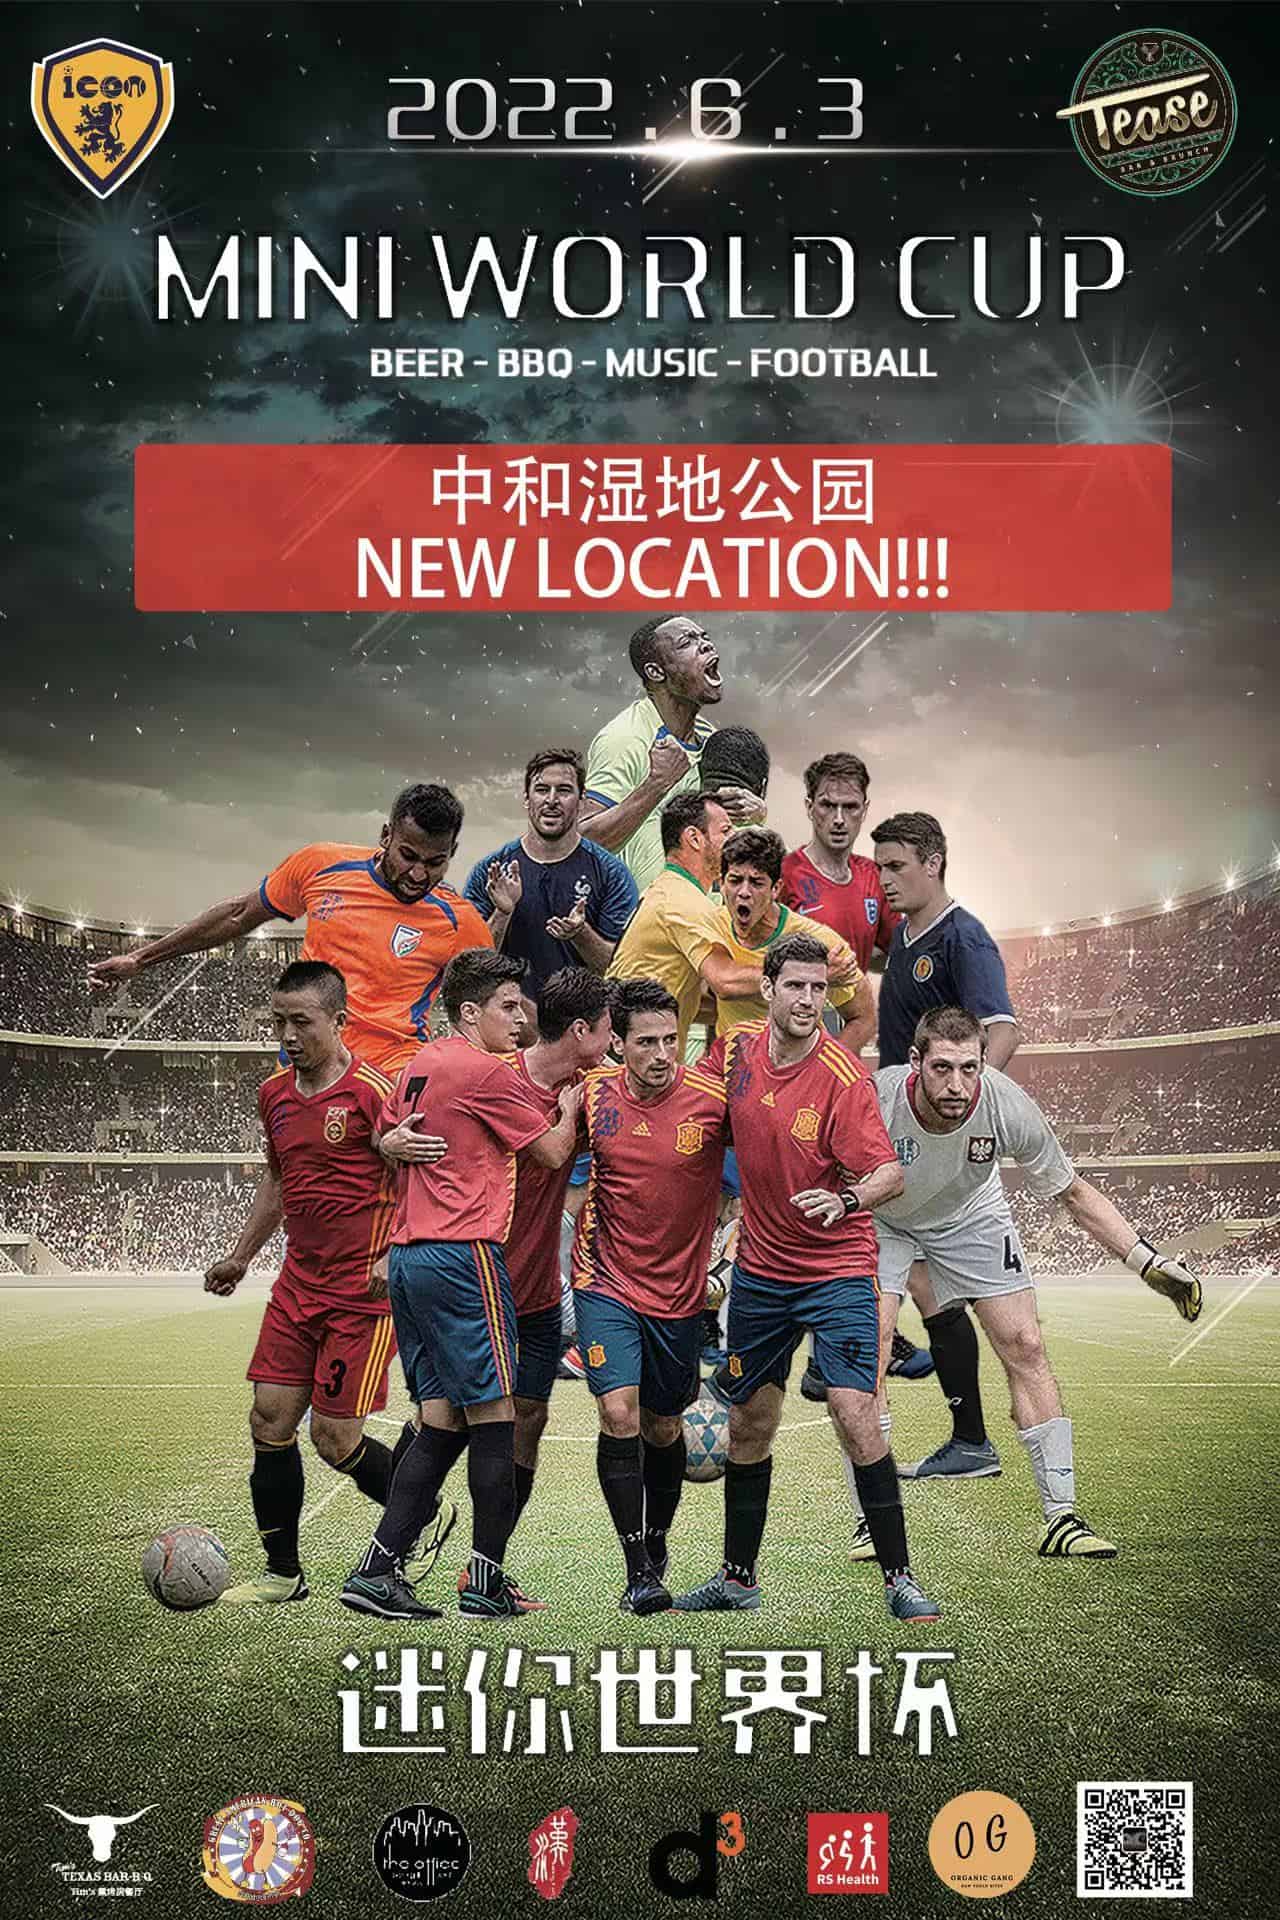 June 3: 2022 Chengdu Mini World Cup - Chengdu Expat